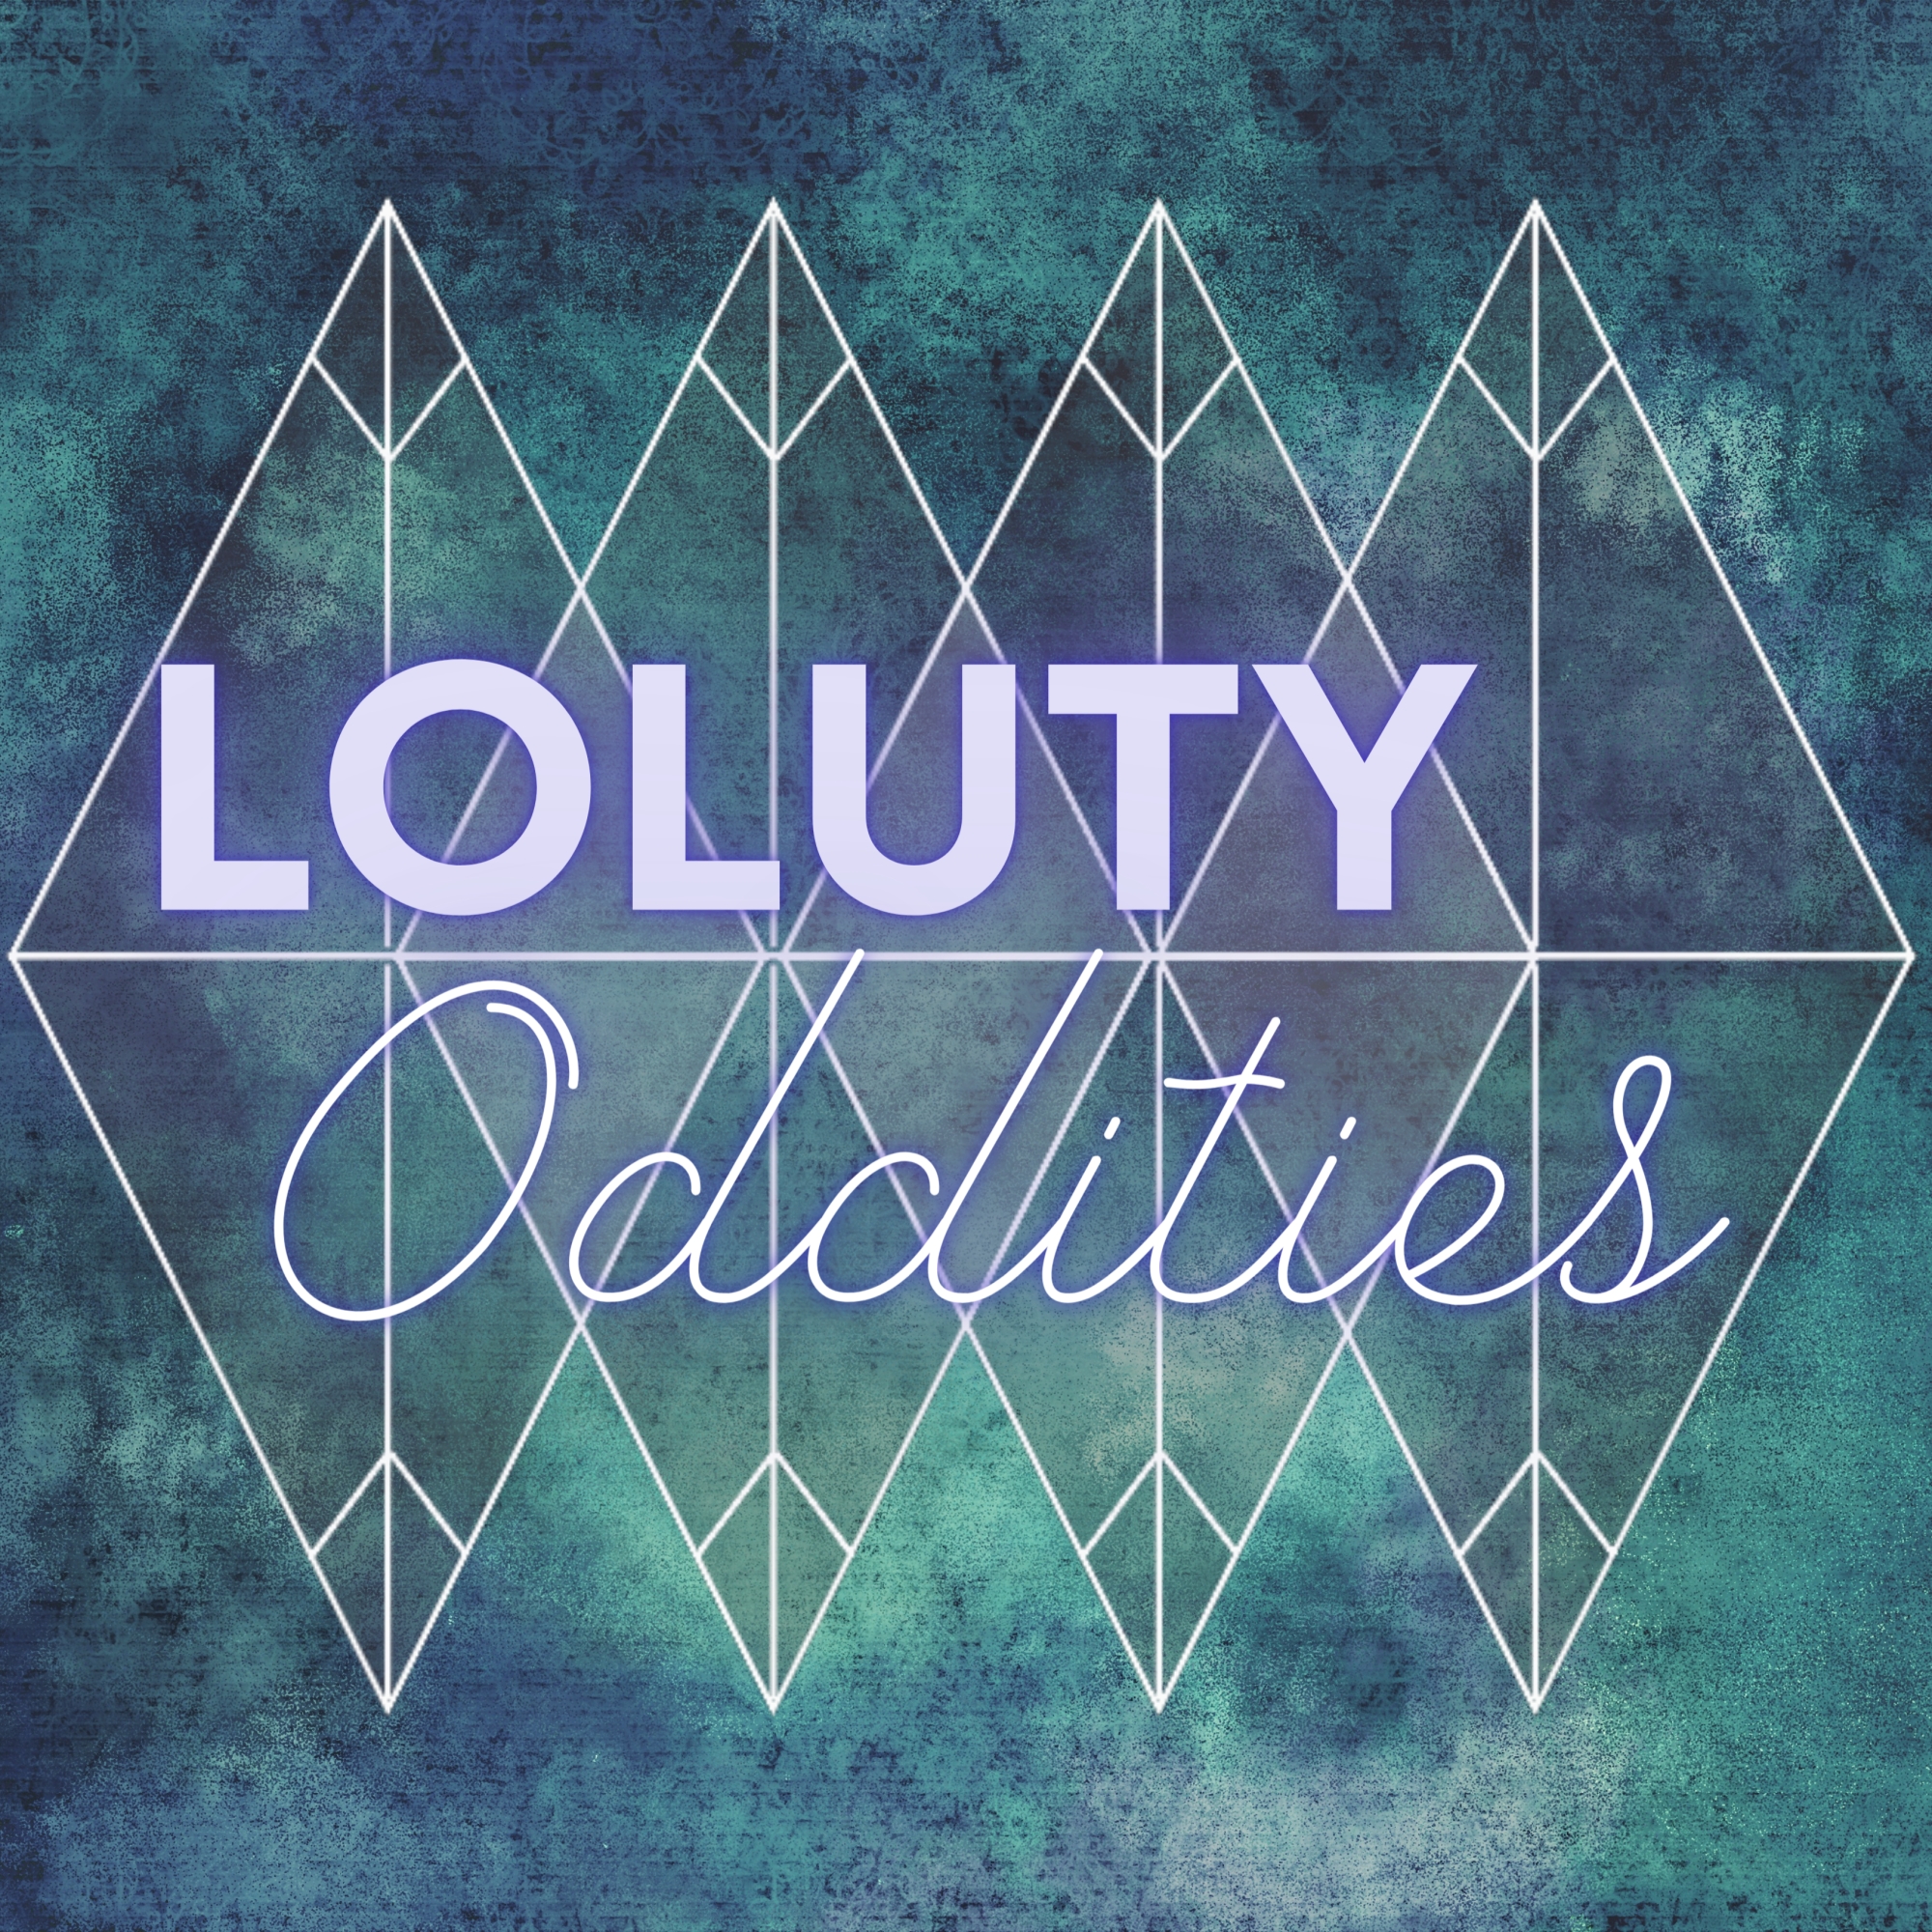 Loluty Oddities | AuctionNinja